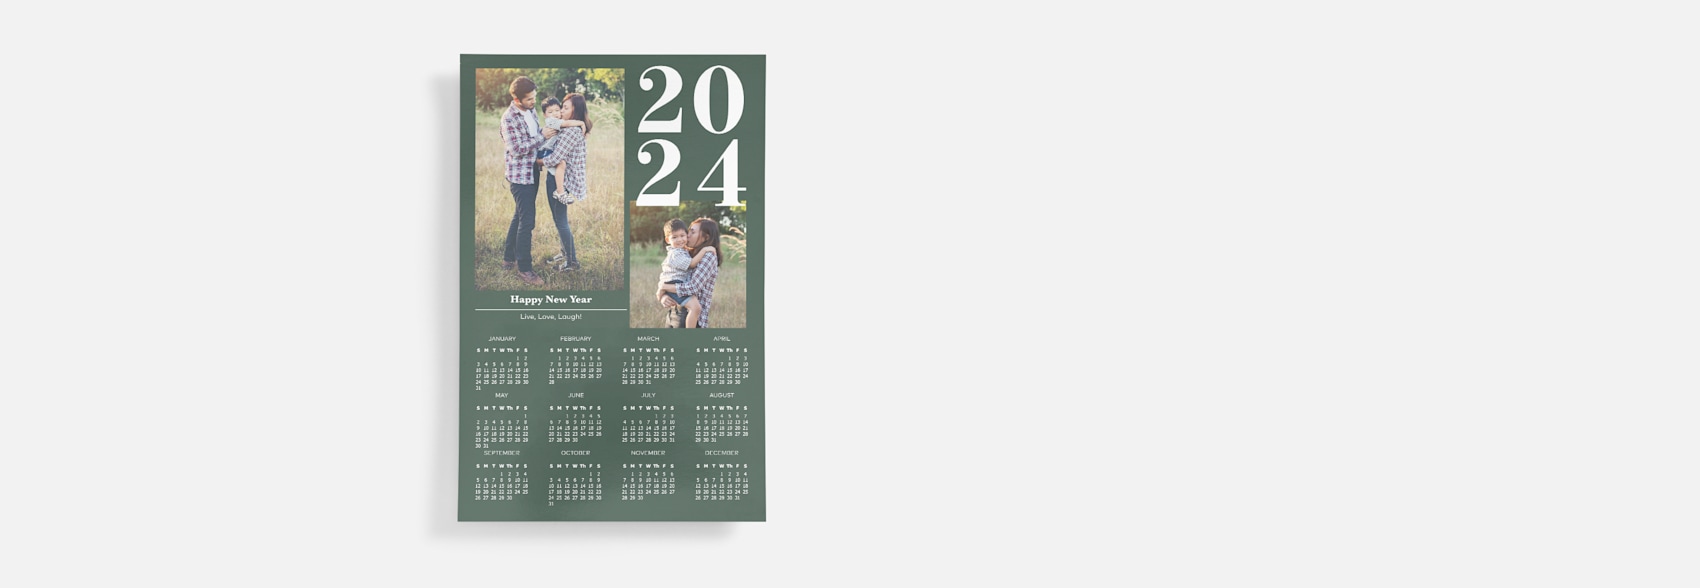 Larger version: poster calendar with family photos